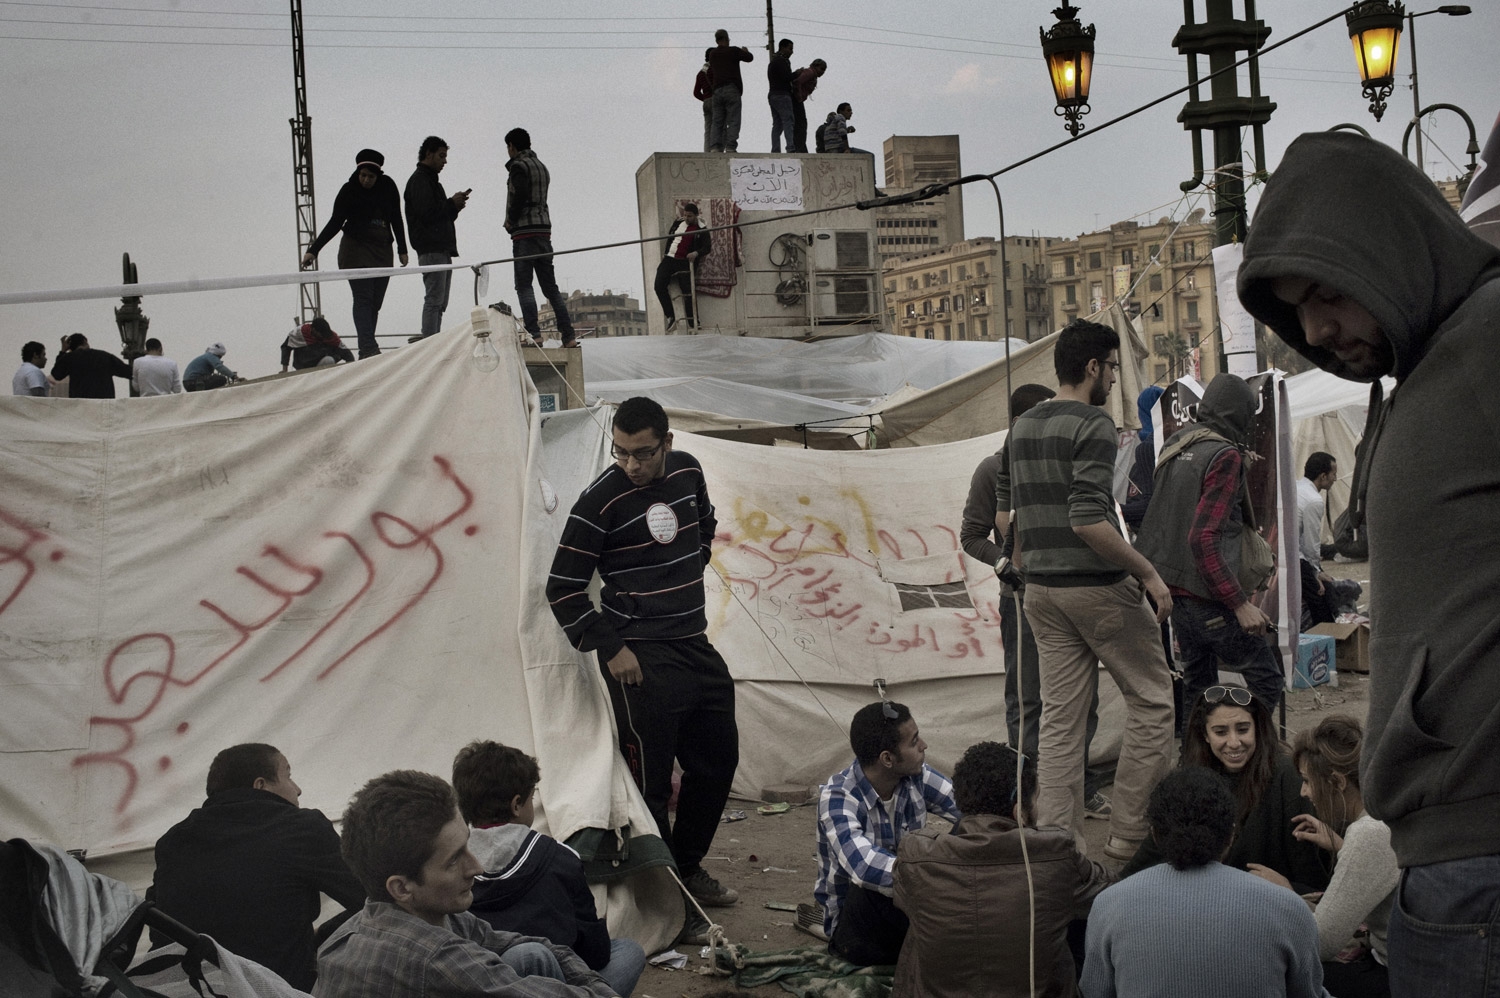 An encampment in Tahrir Square, November 25, 2011.